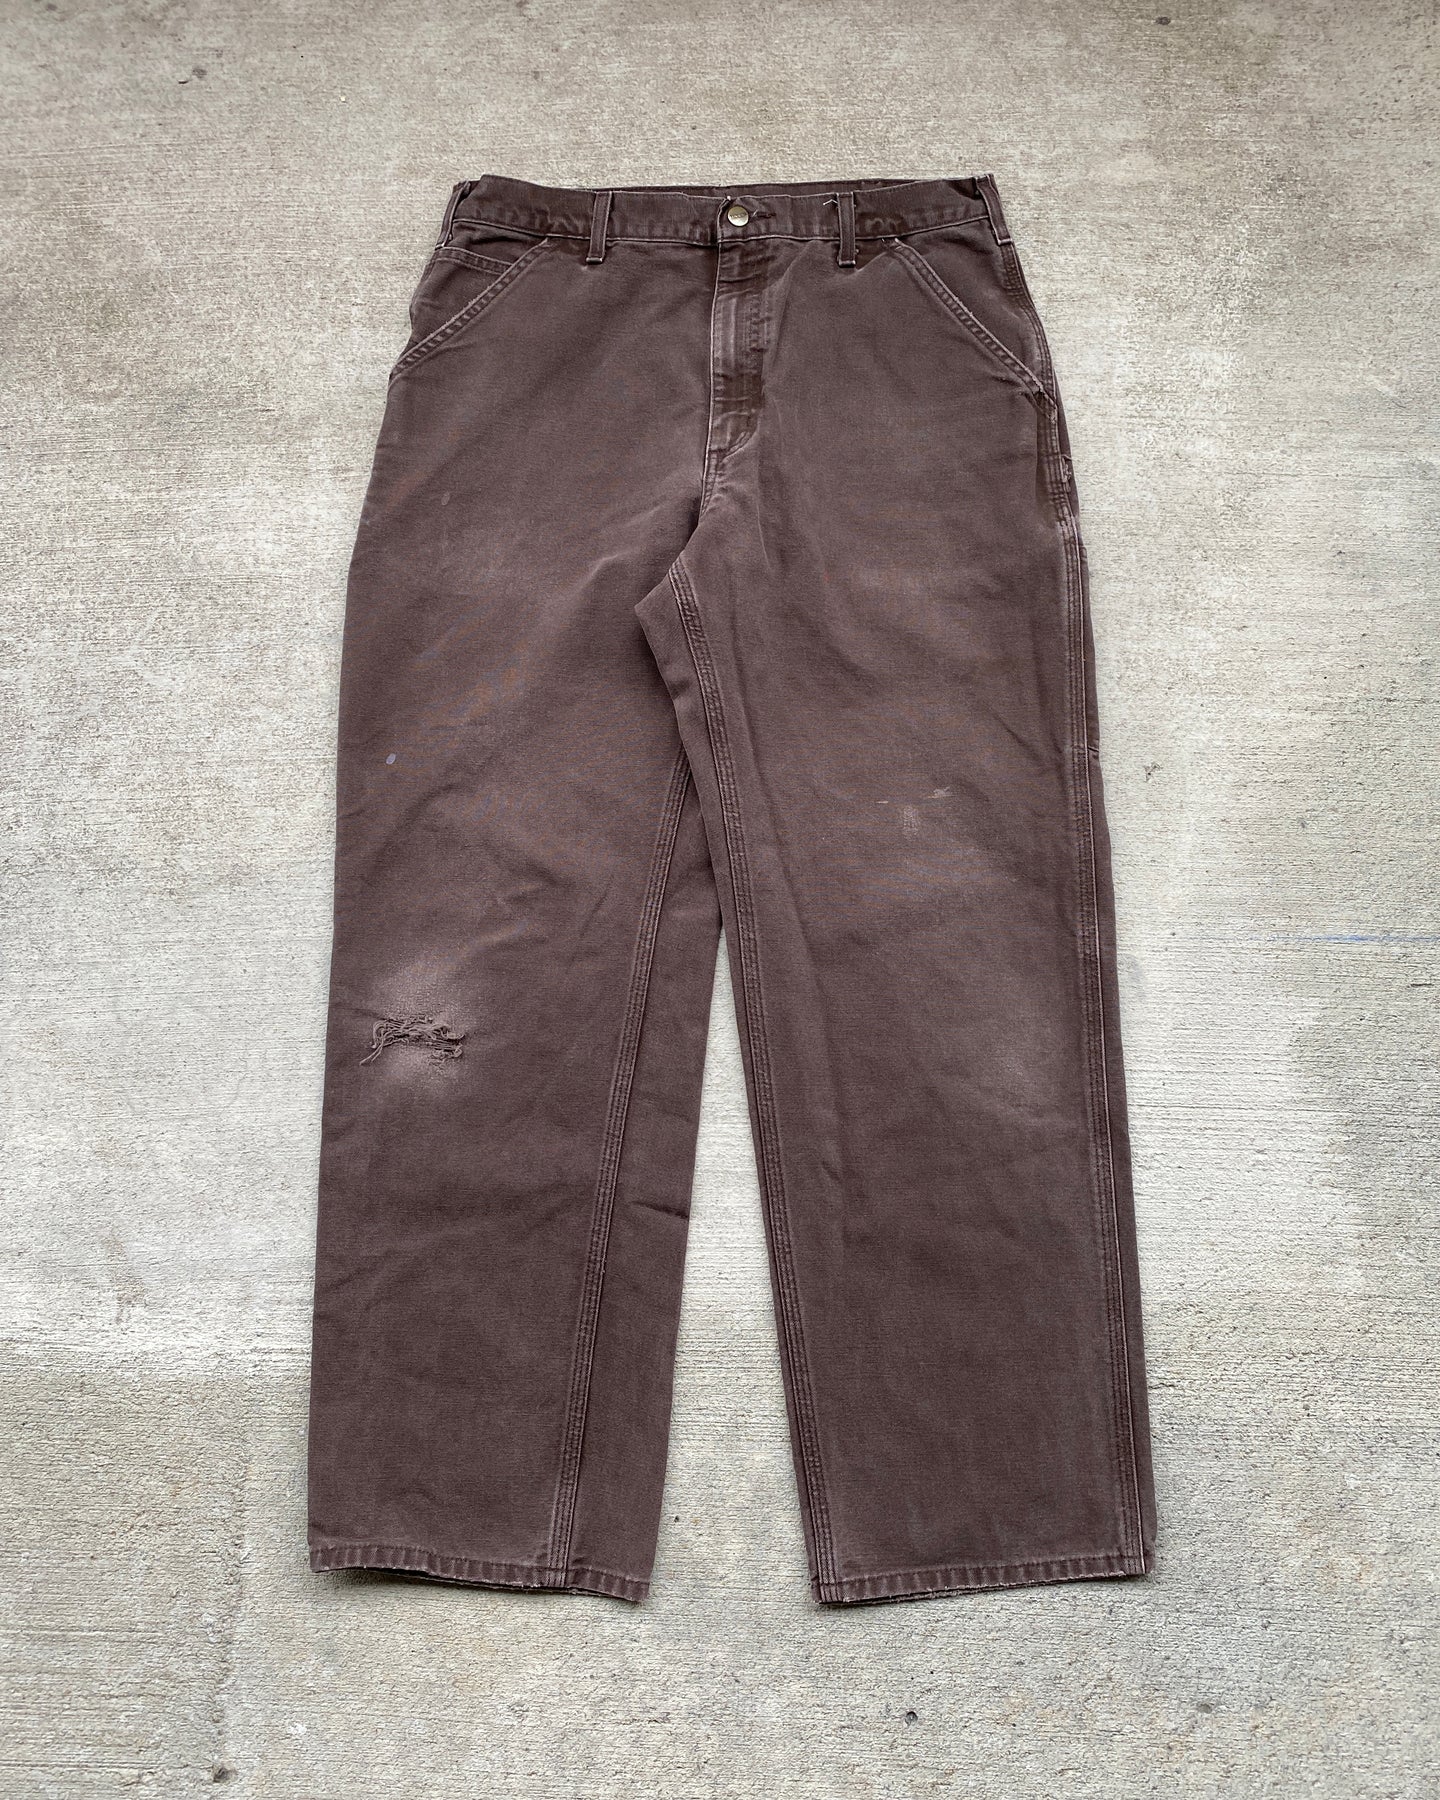 Carhartt Distressed Carpenter Pants - Size 34 x 31